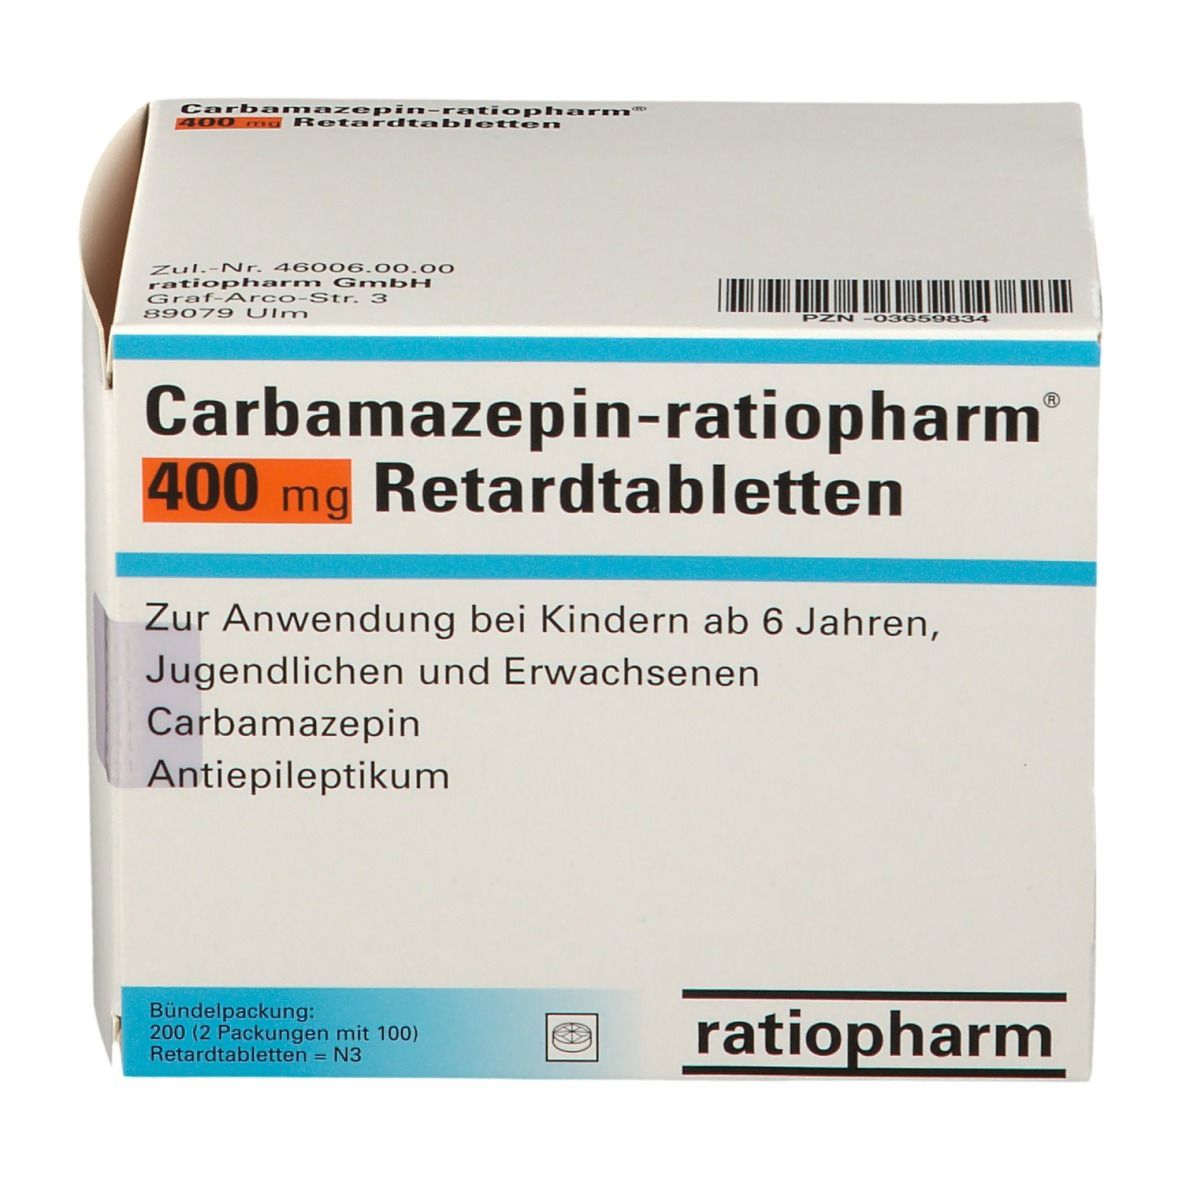 Carbamazepin-ratiopharm® 400 mg